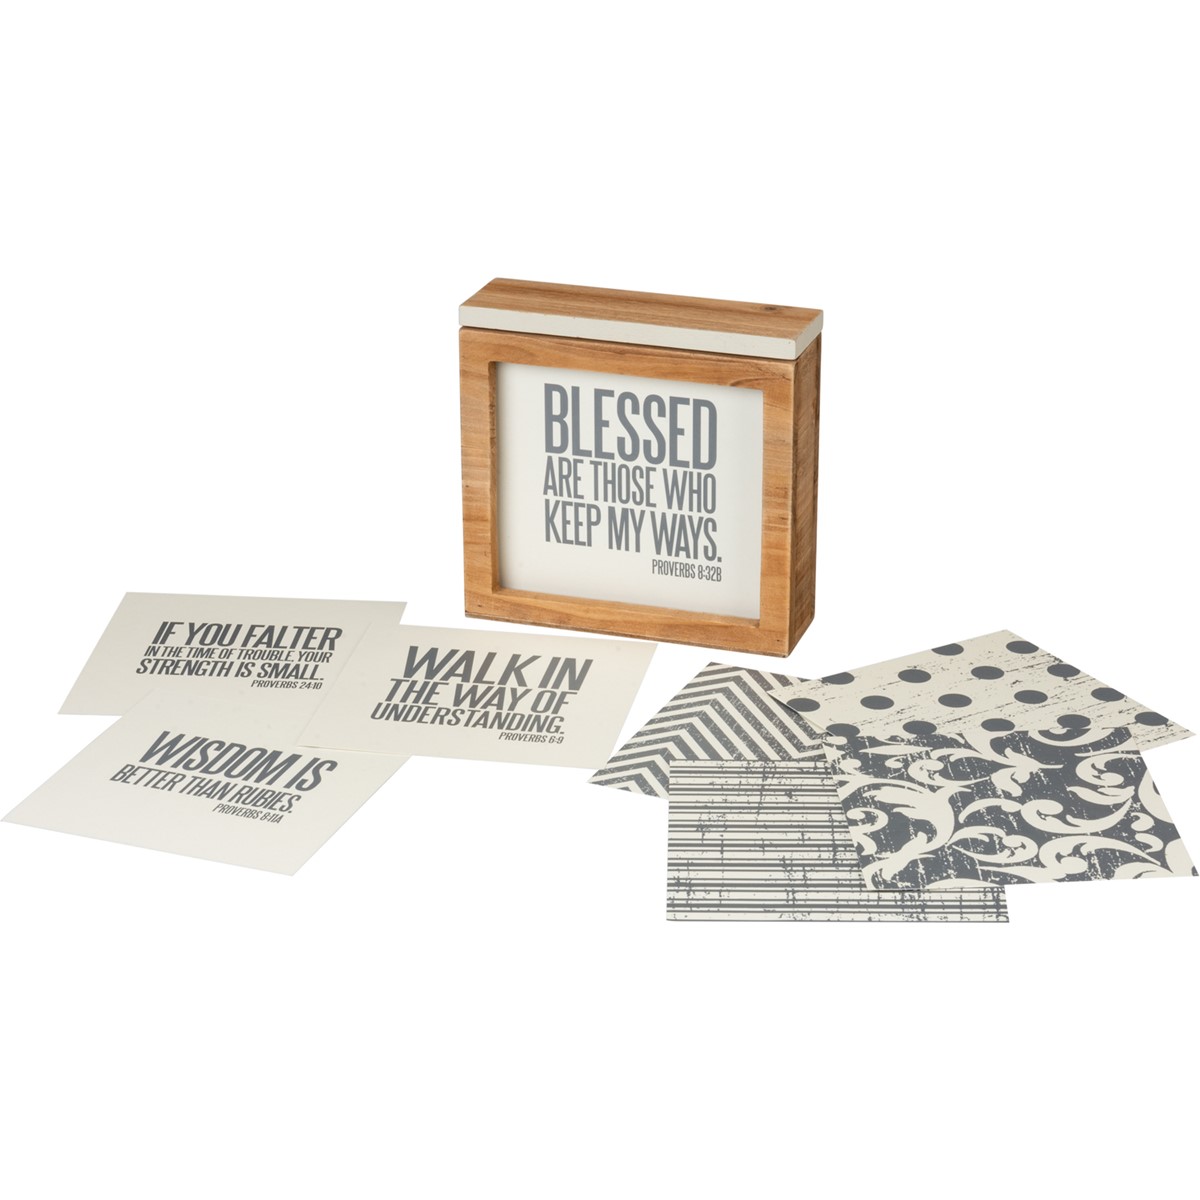 Words Of Wisdom - Scripture - 5.75" x 5.25" x 2.25", Cards: 5" x 5" - Wood, Paper, Metal